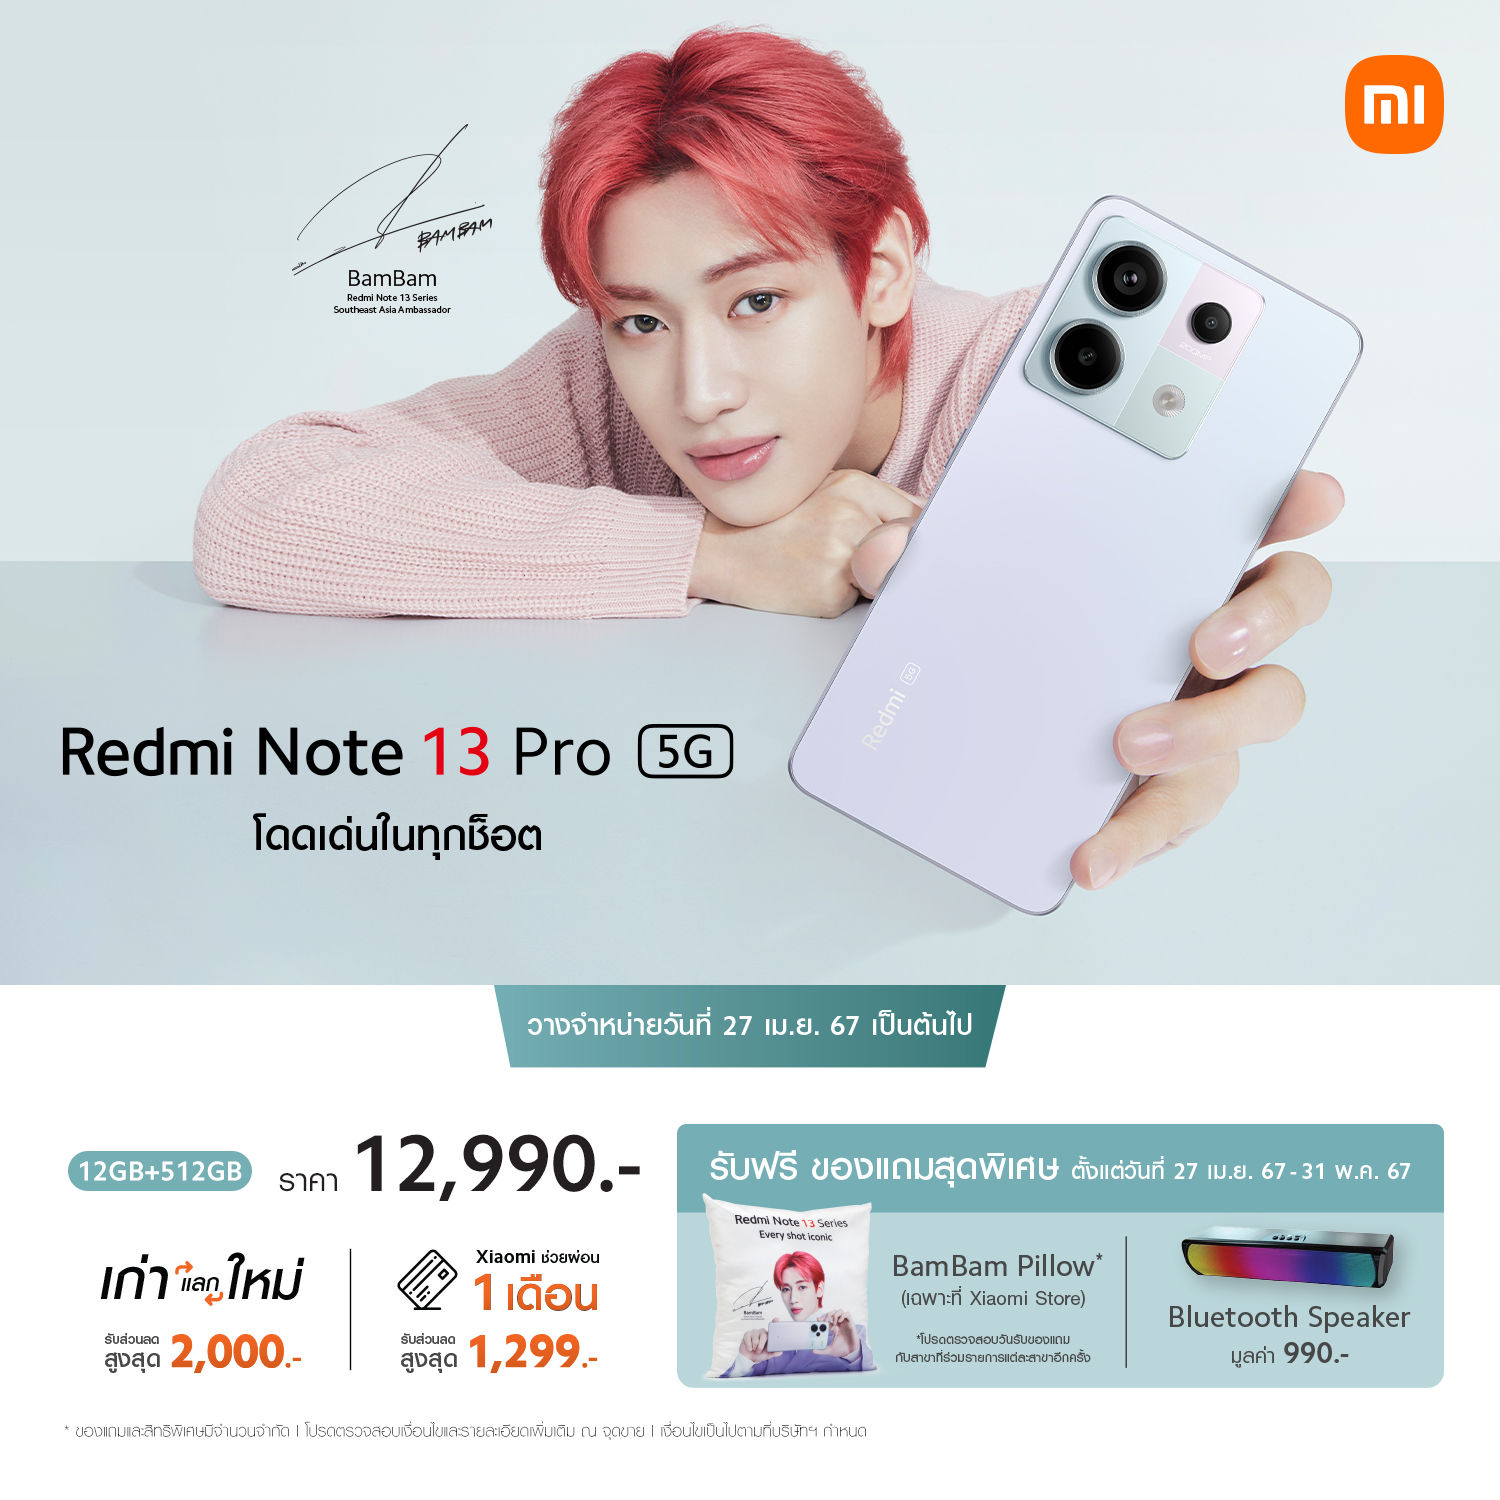 Redmi Note 13 Pro 5G วางจำหน่ายในประเทศไทยอย่างเป็นทางการตั้งแต่ 27 เม.ย. 67 เป็นต้นไป  ในราคาเพียง 12,990 บาท สำนักพิมพ์แม่บ้าน